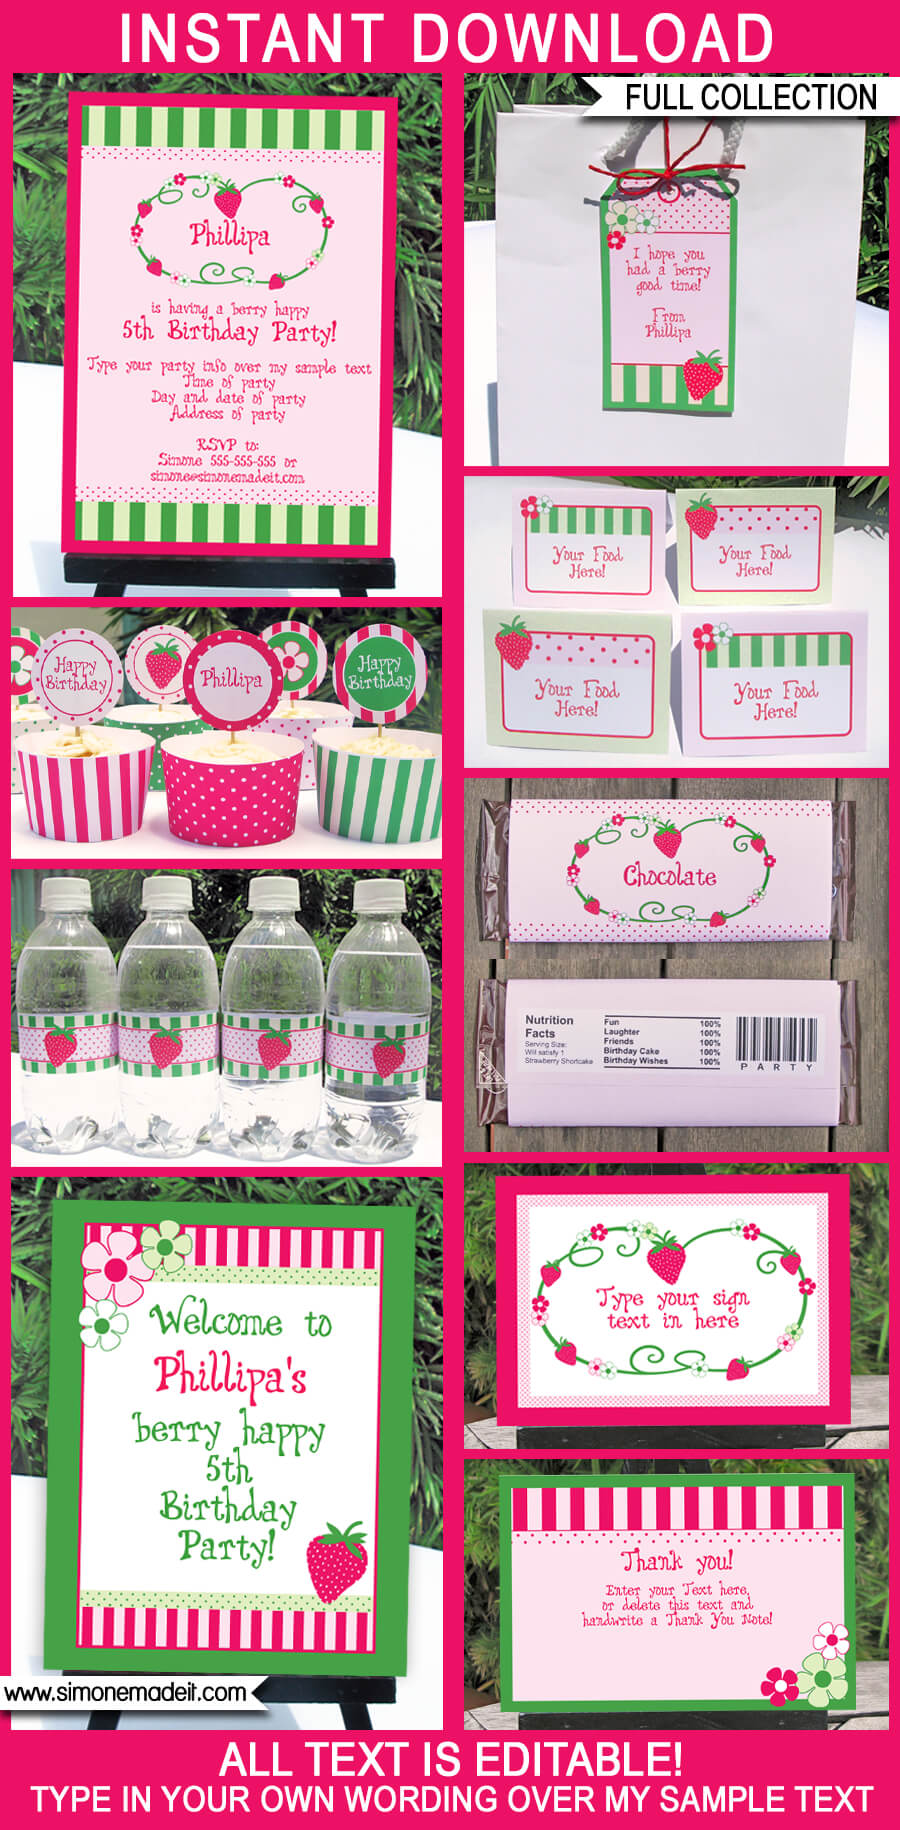 Strawberry Shortcake Party Printables, Invitations & Decorations Templates | Birthday Theme | Editable Text PDF | INSTANT DOWNLOAD $12.50 via SIMONEmadeit.com